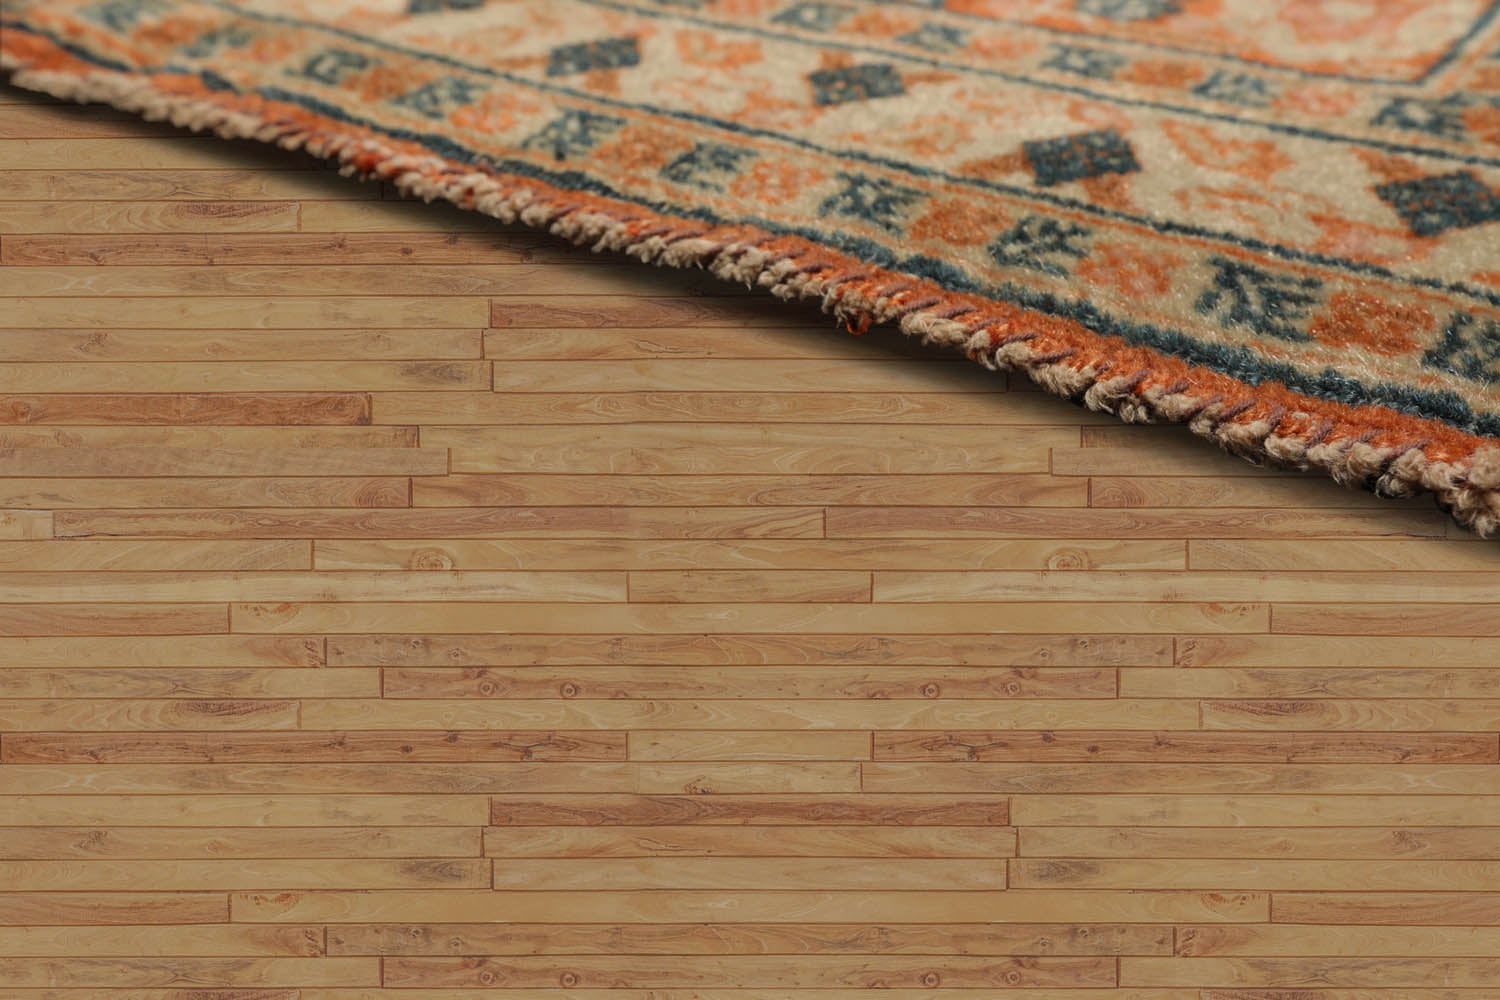 Humaira 4x6 Hand Knotted Tribal 100% Wool Heriz Traditional 250 KPSI Oriental Area Rug Beige, Burnt Orange Color